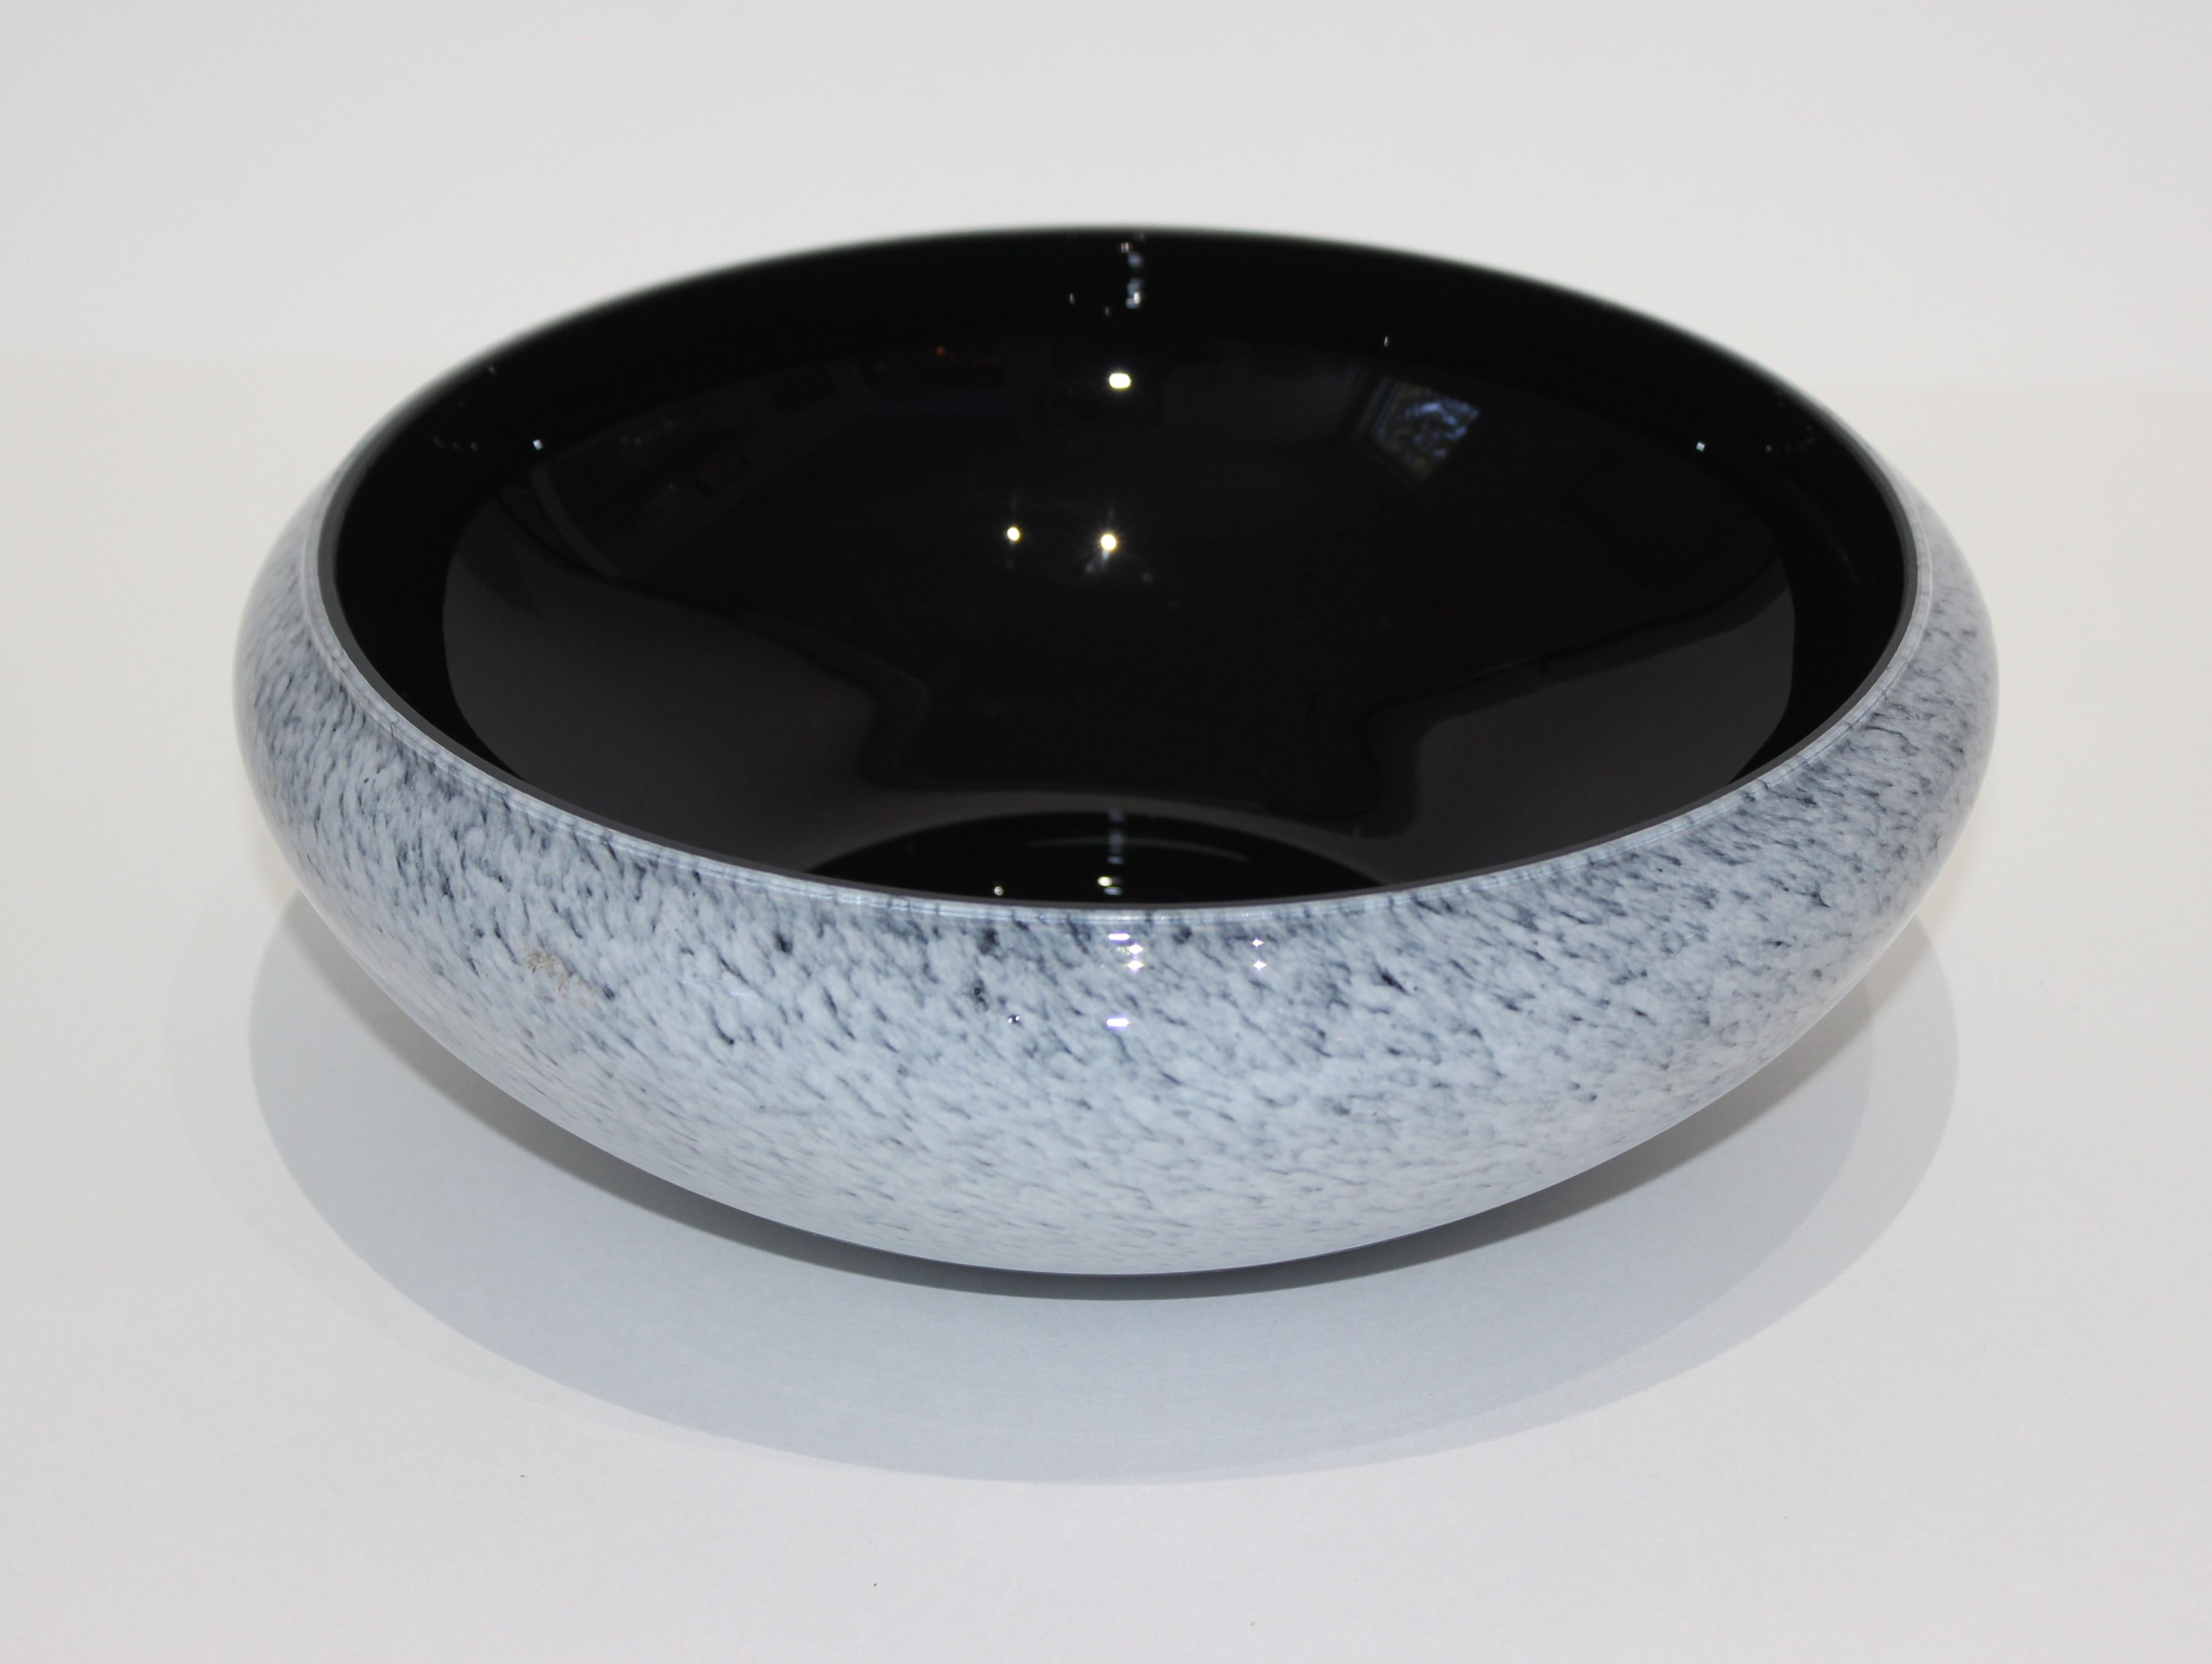 Sleek stylish Murano glass bowl,
Black interior with grey splatter exterior.